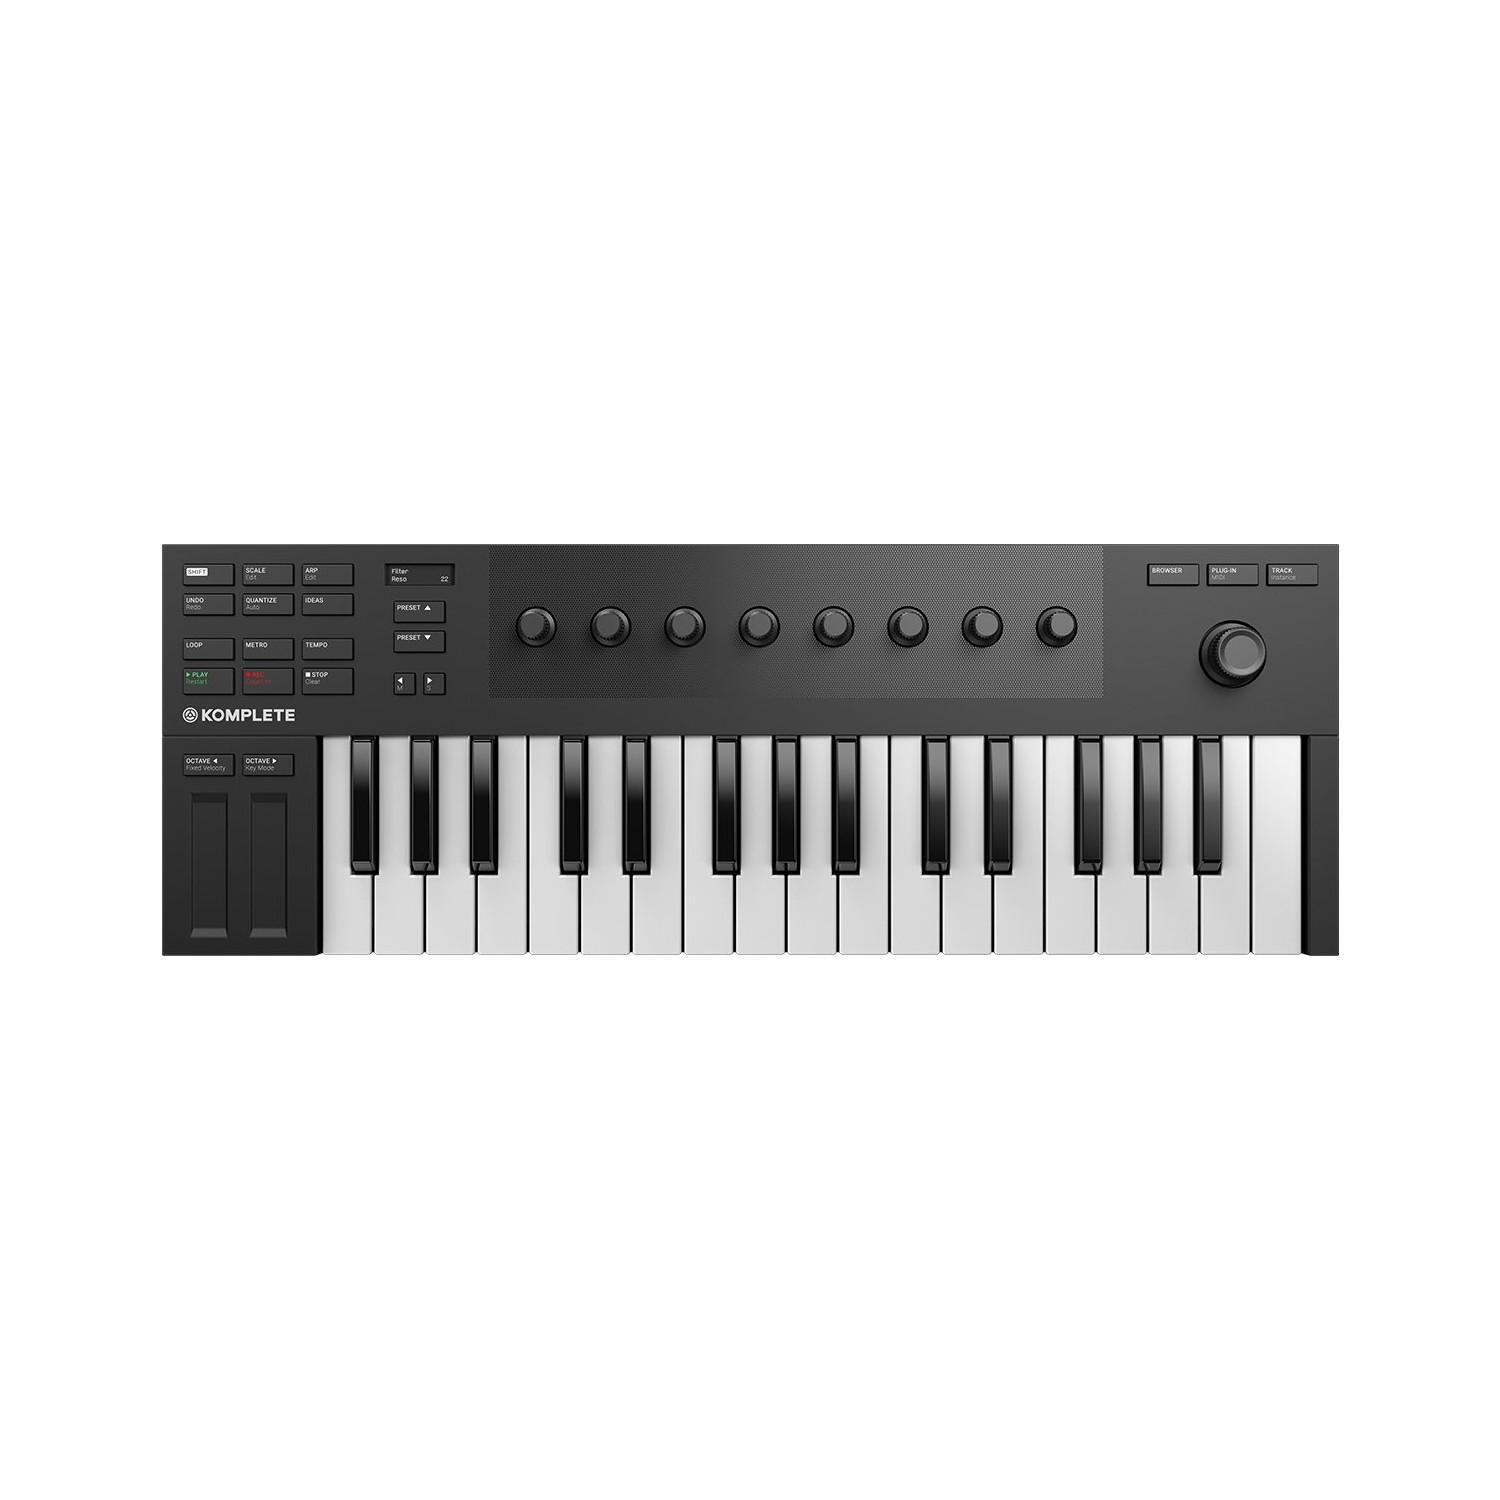 native instruments m32 midi keyboard